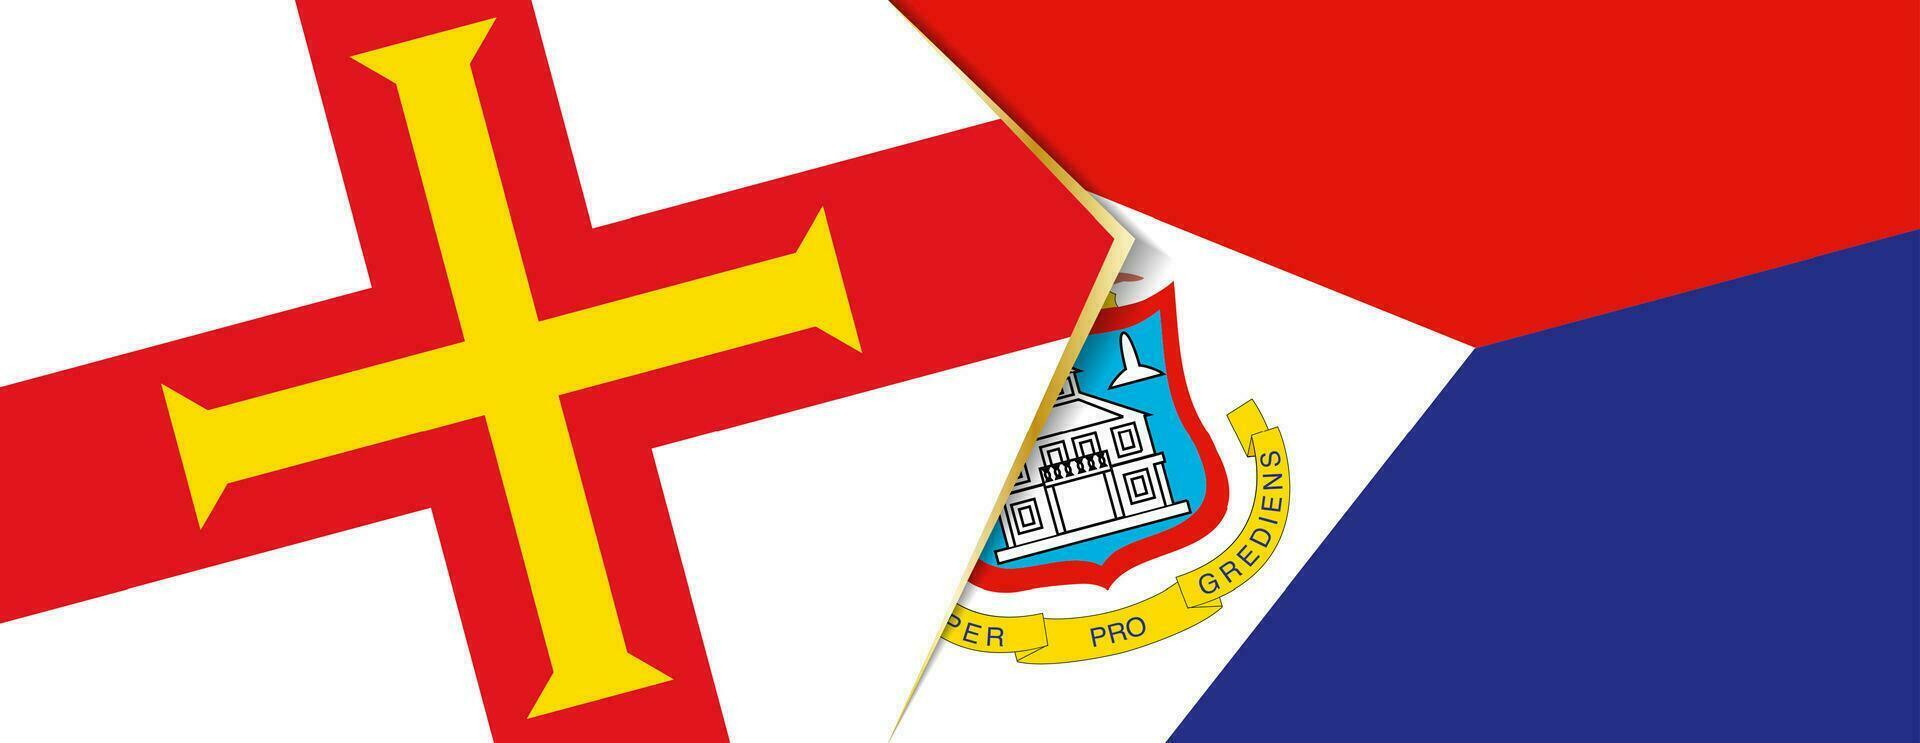 Guernsey en sint maarten vlaggen, twee vector vlaggen.